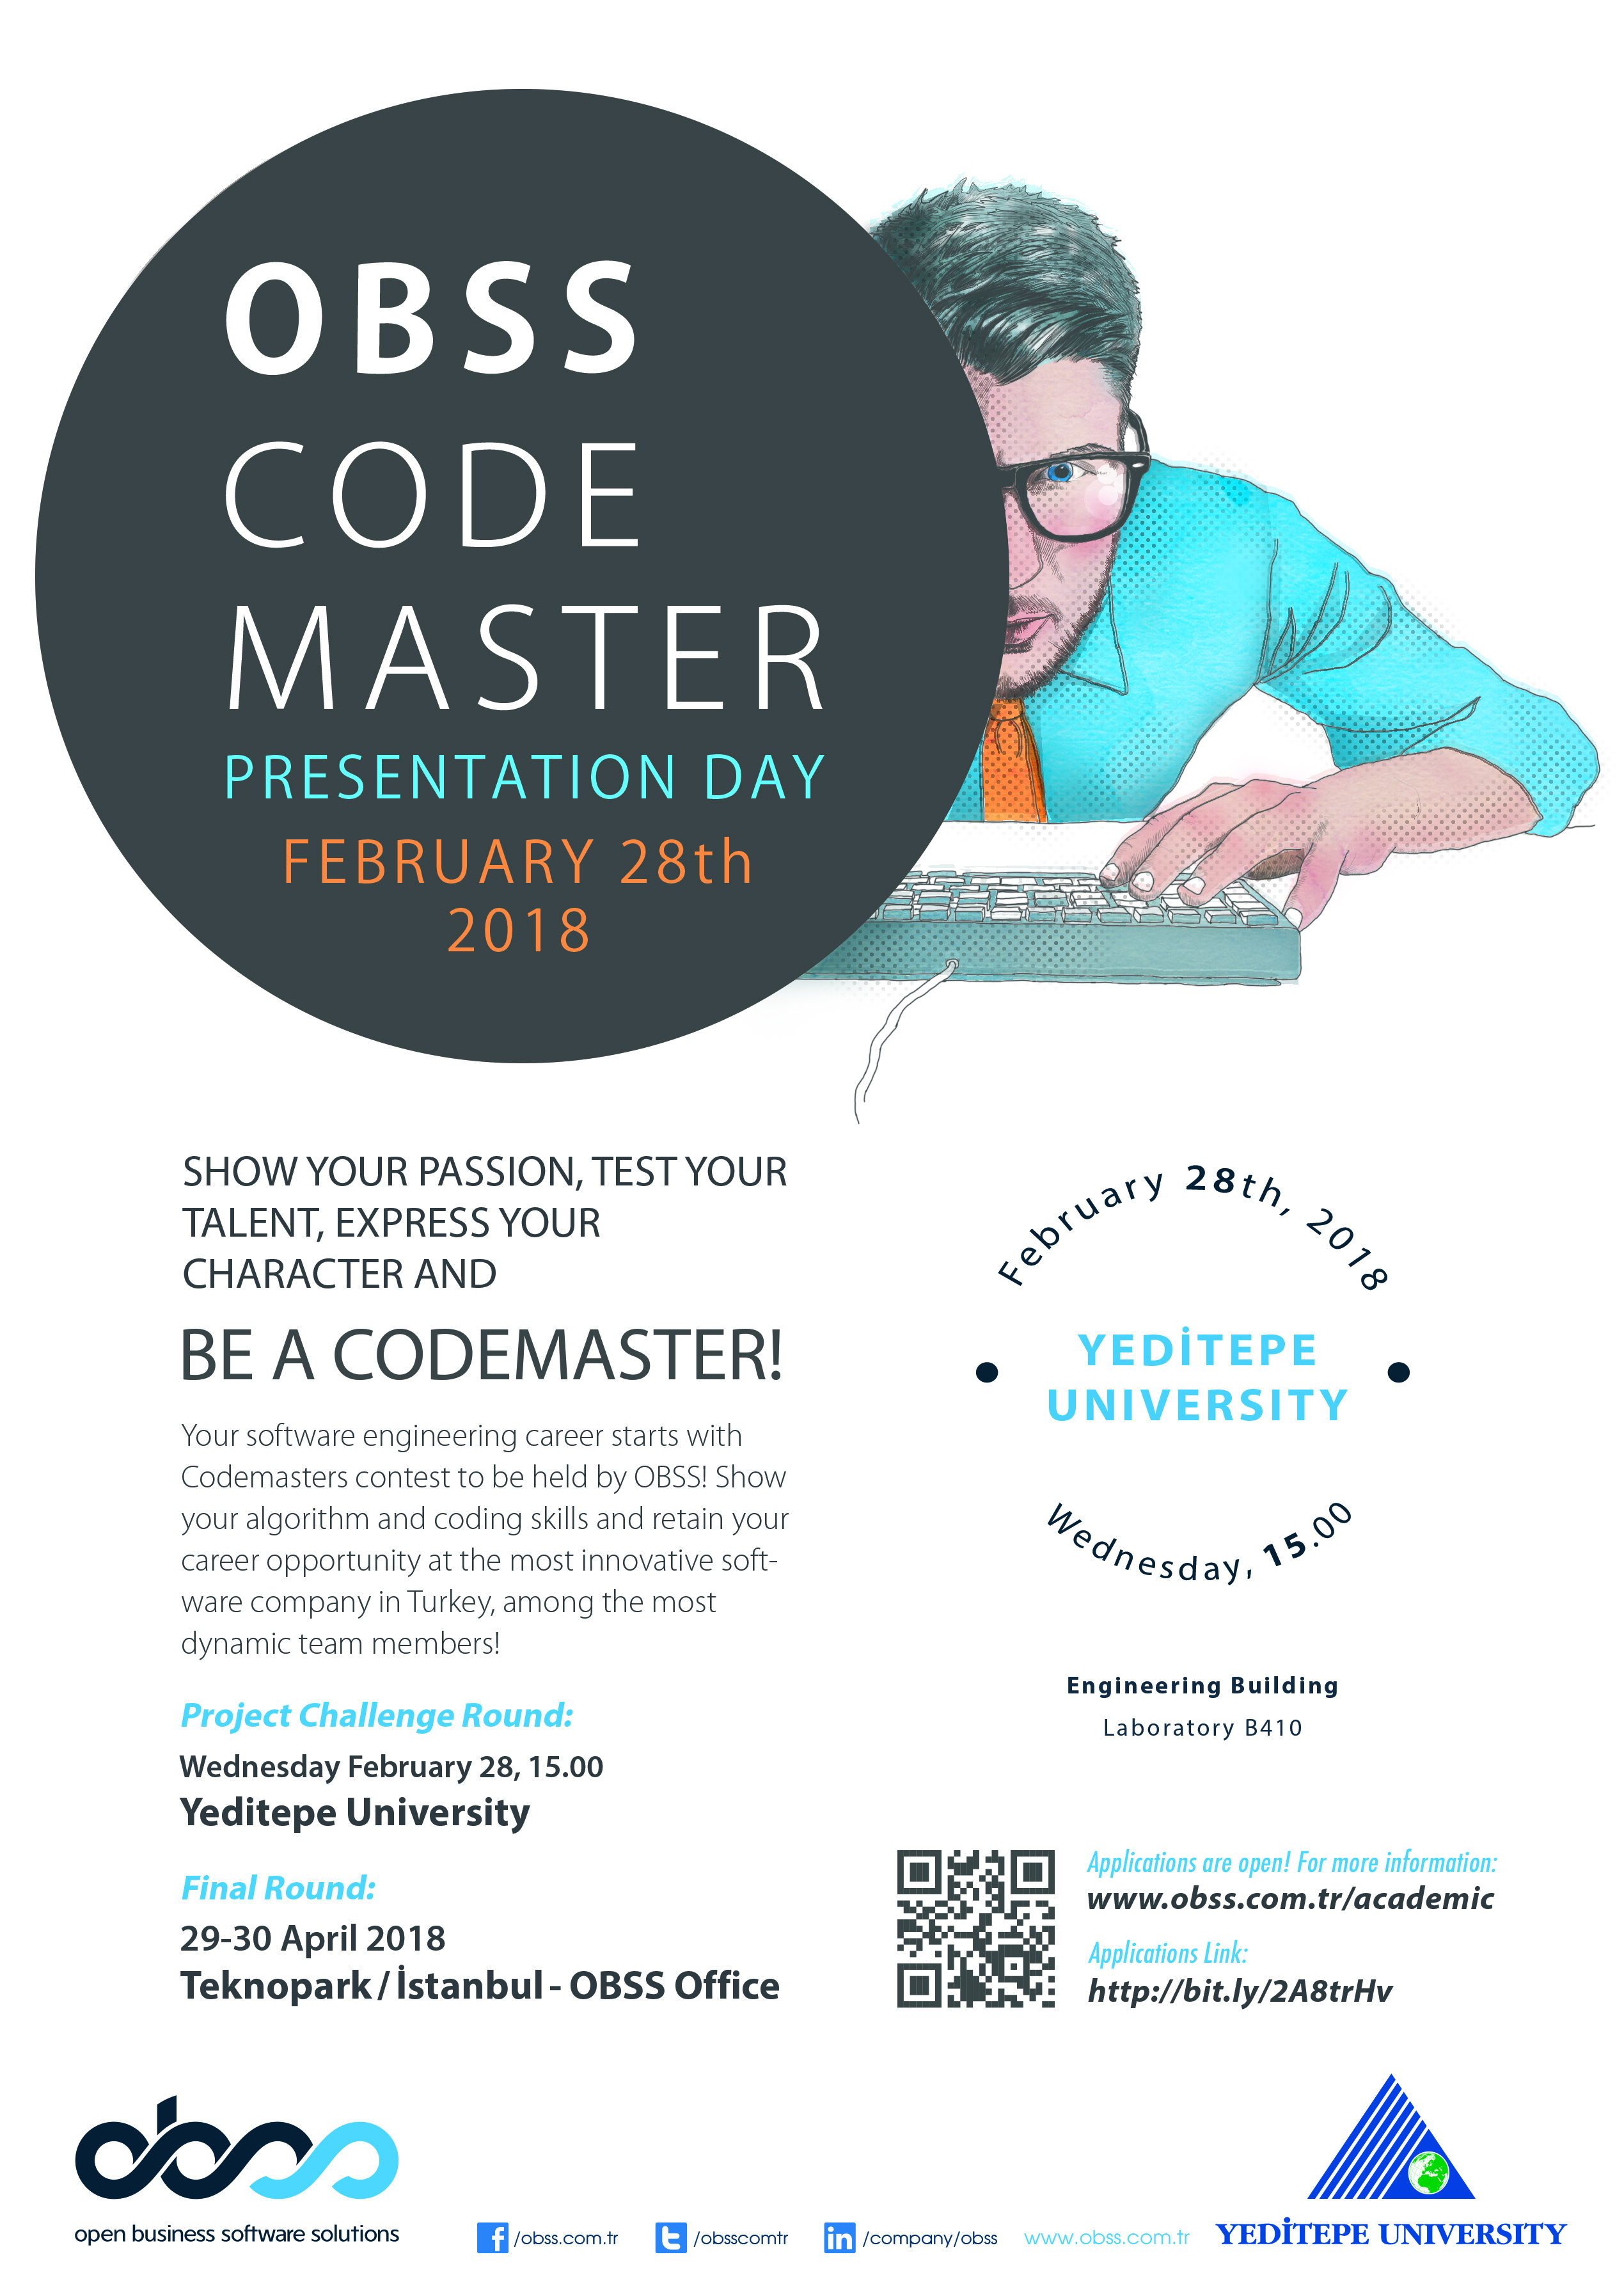 OBSS Code Master Contest